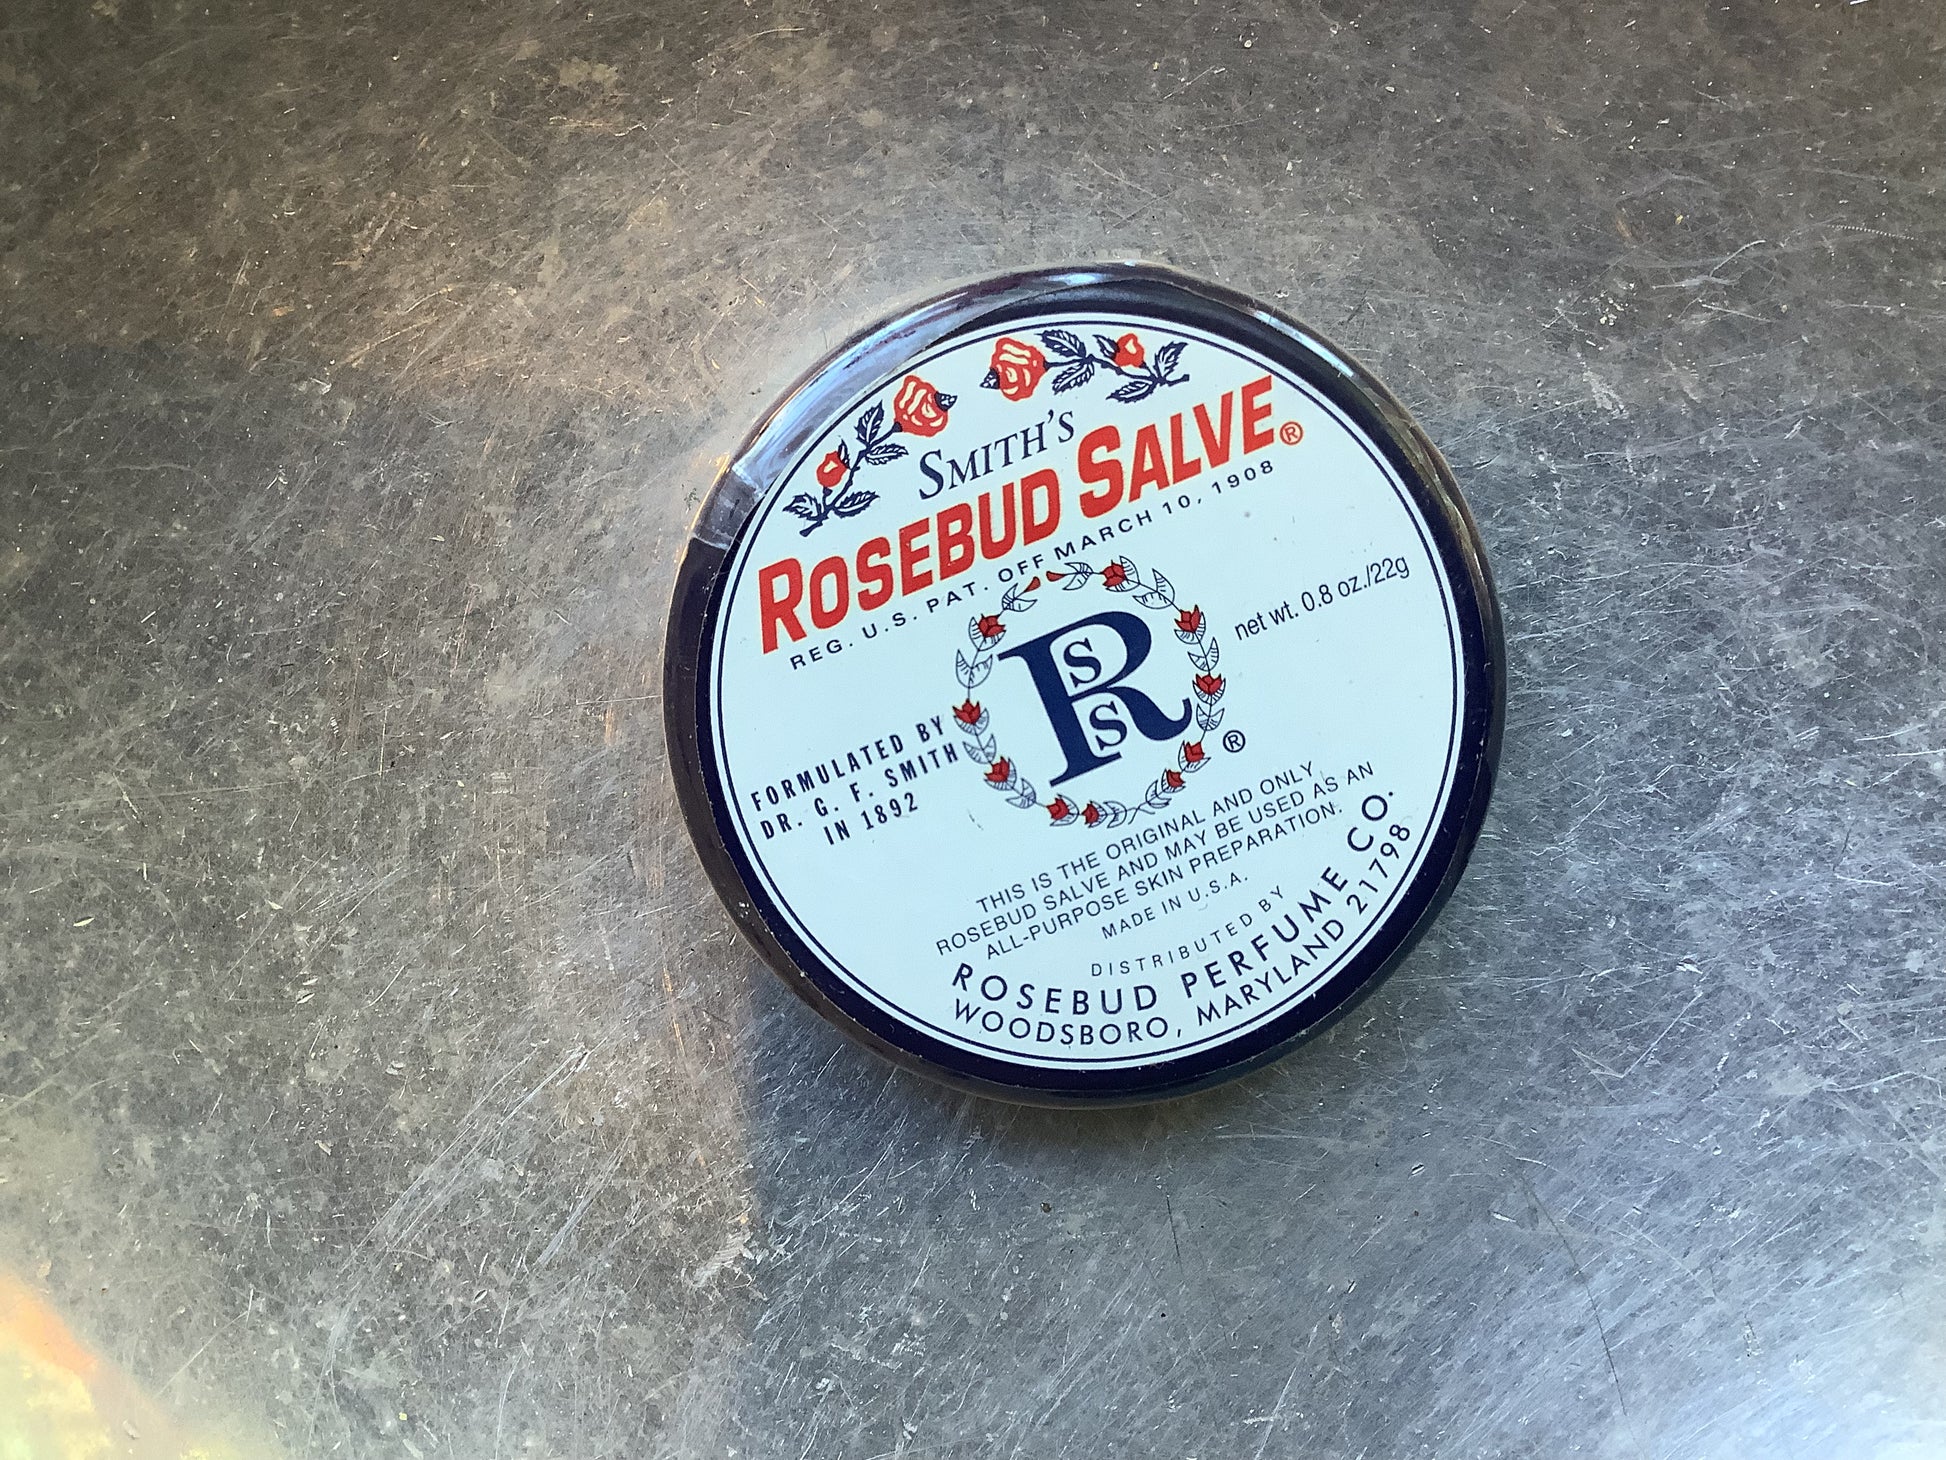 Container of Smith's rosebud salve lip balm